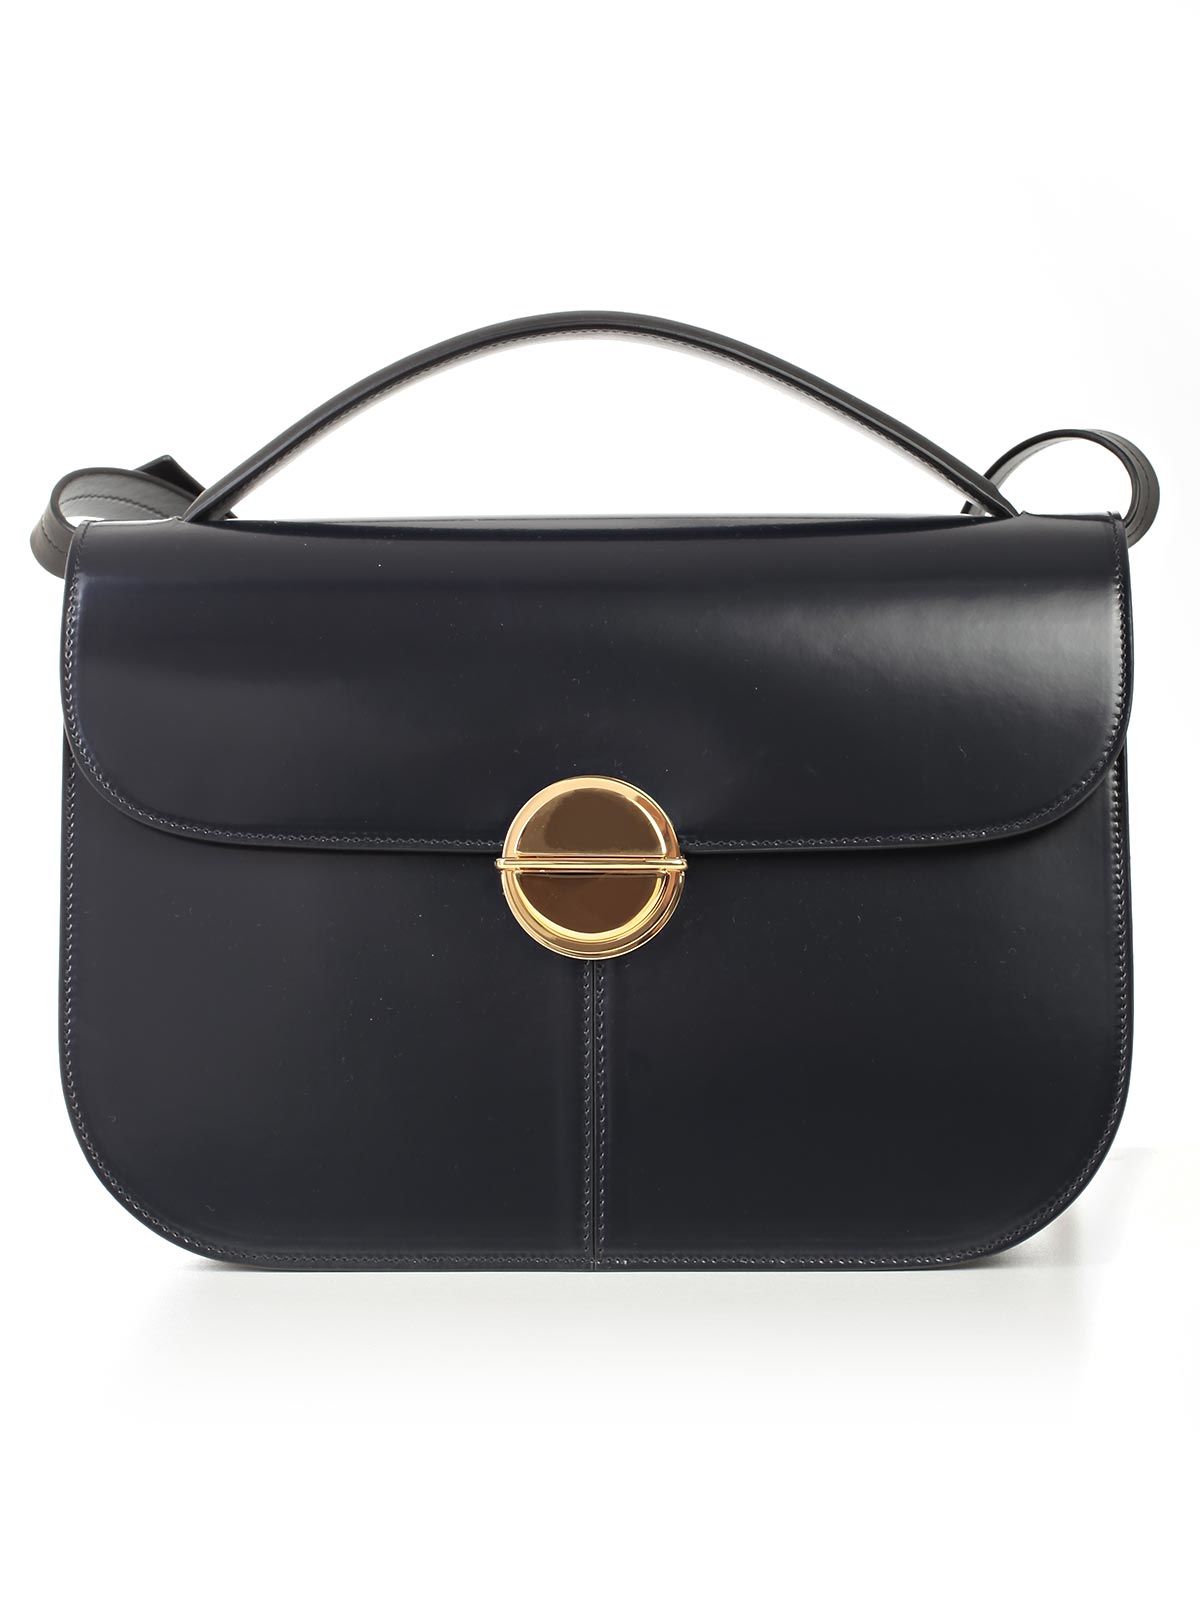 Marni - Marni Shoulder Bag - Black, Women's Shoulder Bags | Italist